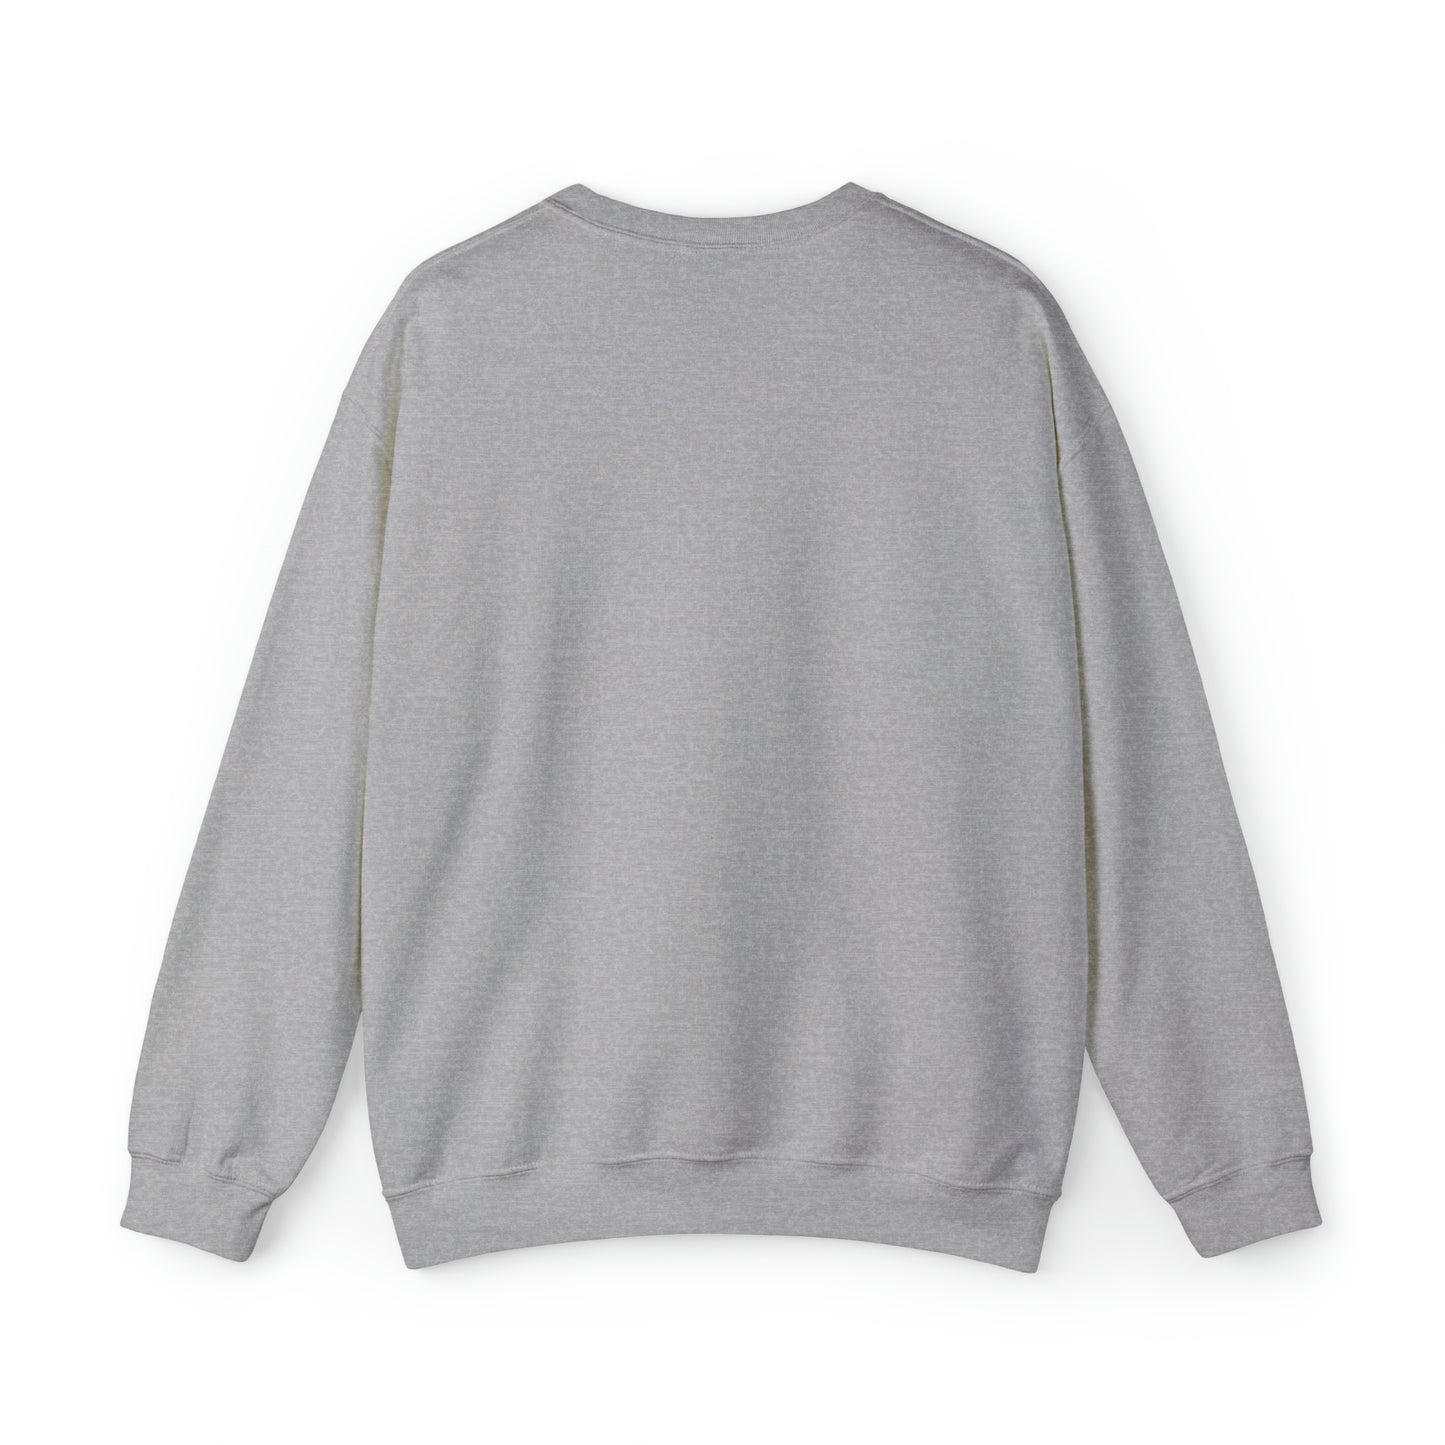 “MY FAFO GOES BY TITO” Unisex Heavy Blend™ Crewneck Sweatshirt